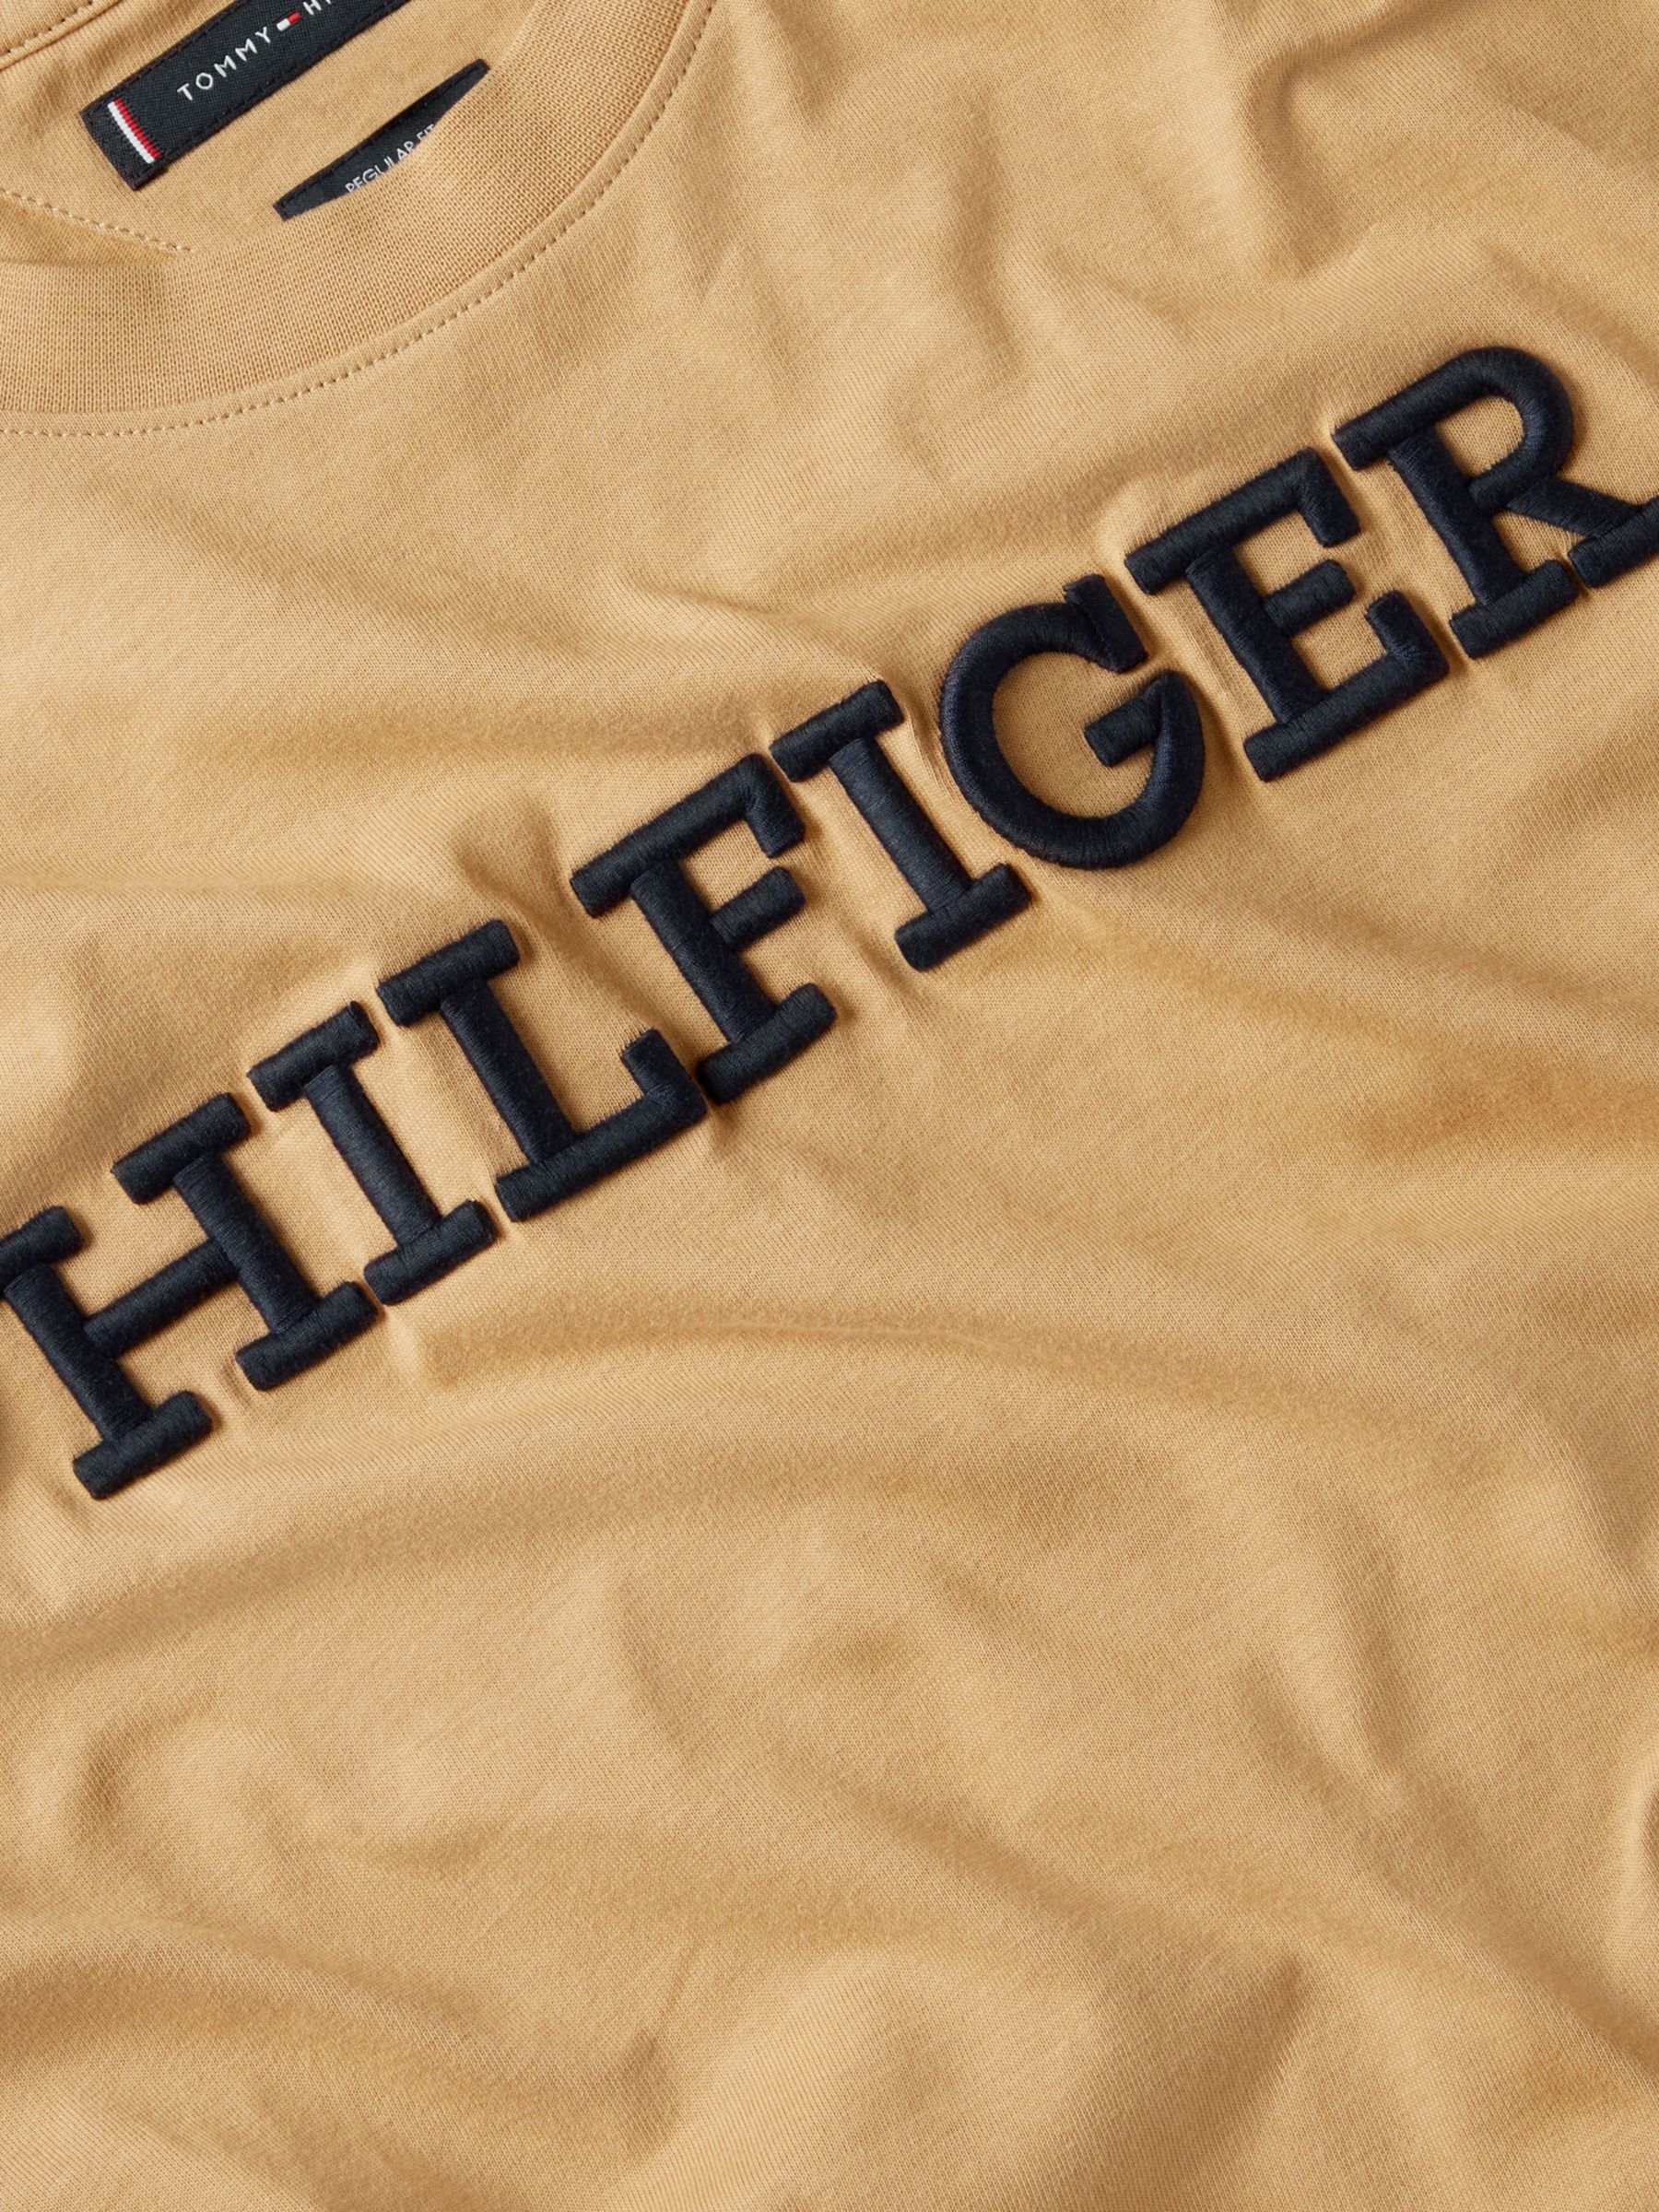 Tommy Hilfiger Monotype Graphic T-Shirt, Classic Khaki, S